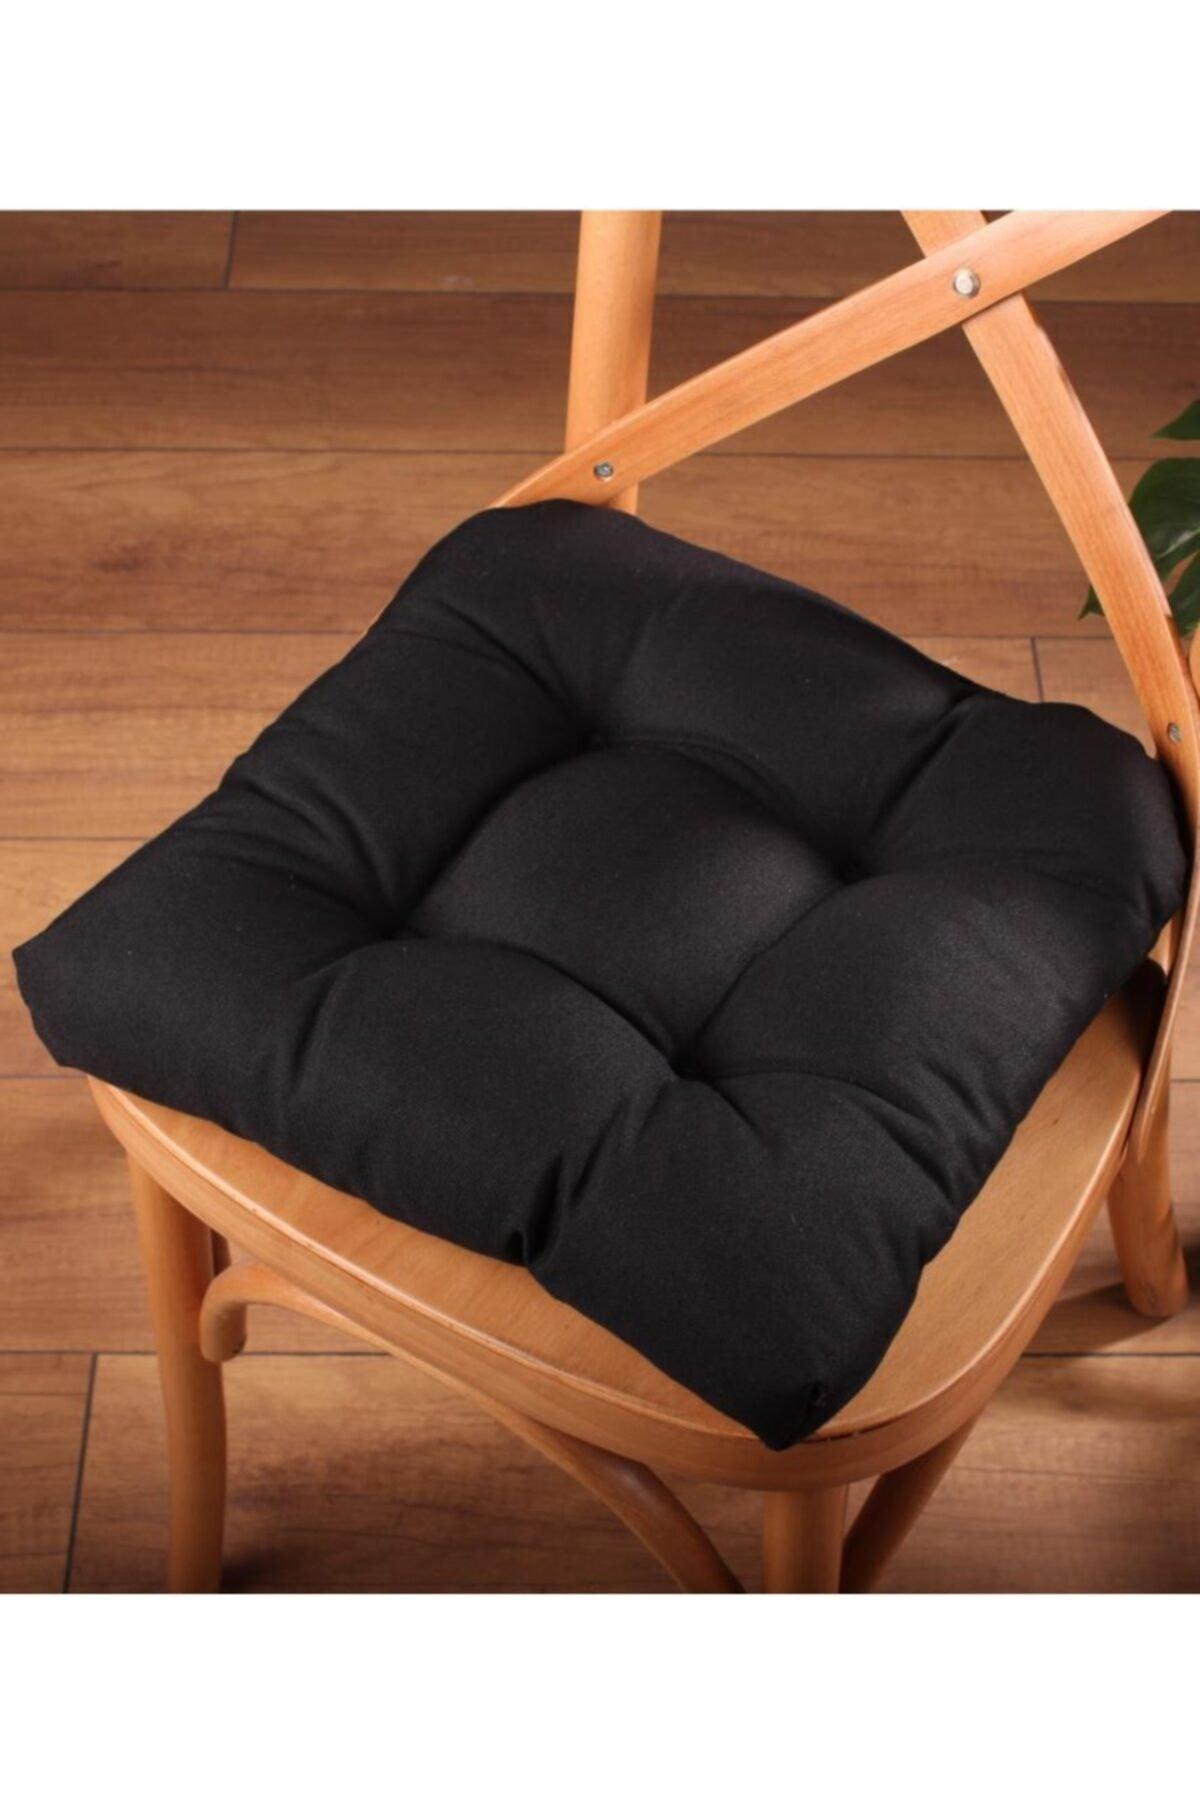 4 Lux Pofidik Black Chair Cushion Special